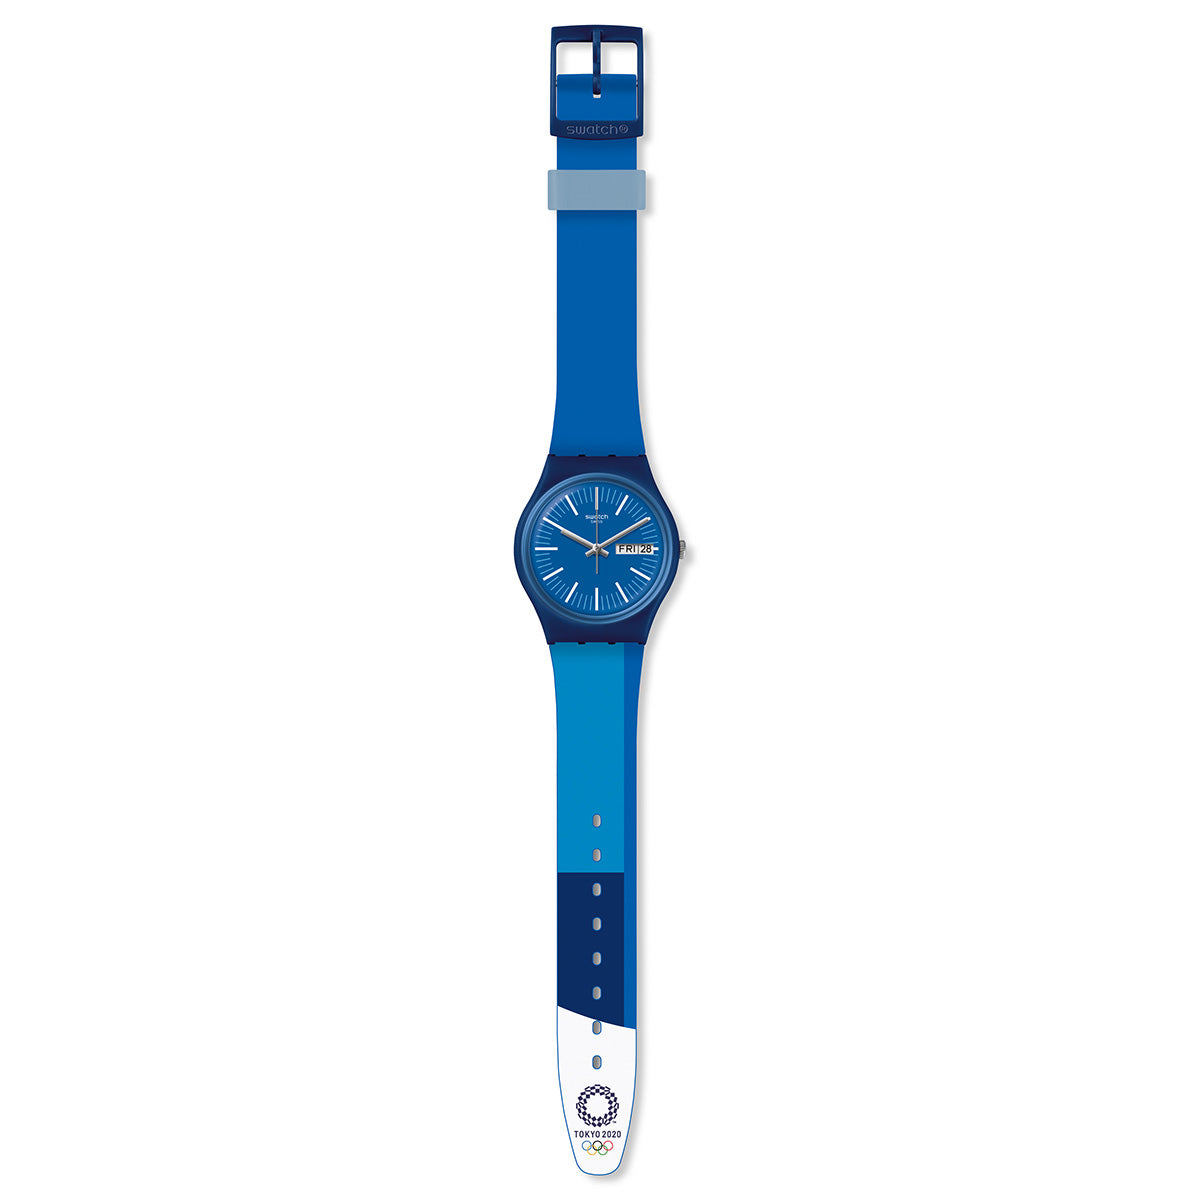 swatch スウォッチ 腕時計 メンズ レディース オリジナルズ ジェント Originals Gent TOKYO 2020 BLUE GZ708